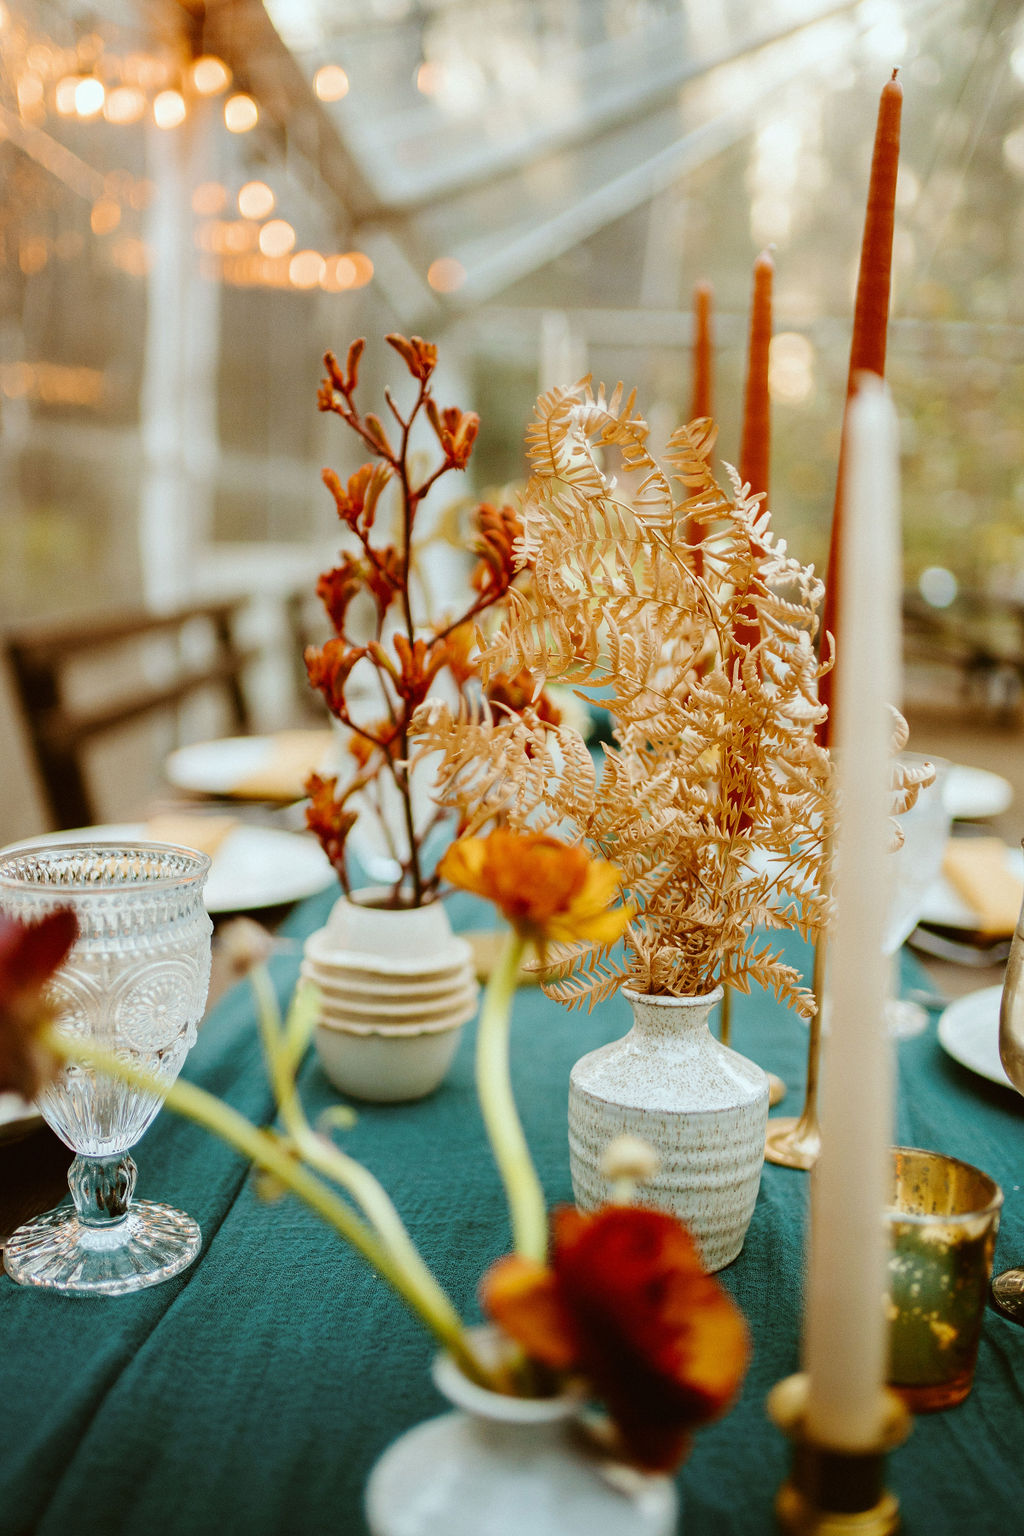 Dried floral arrangements on guest tables